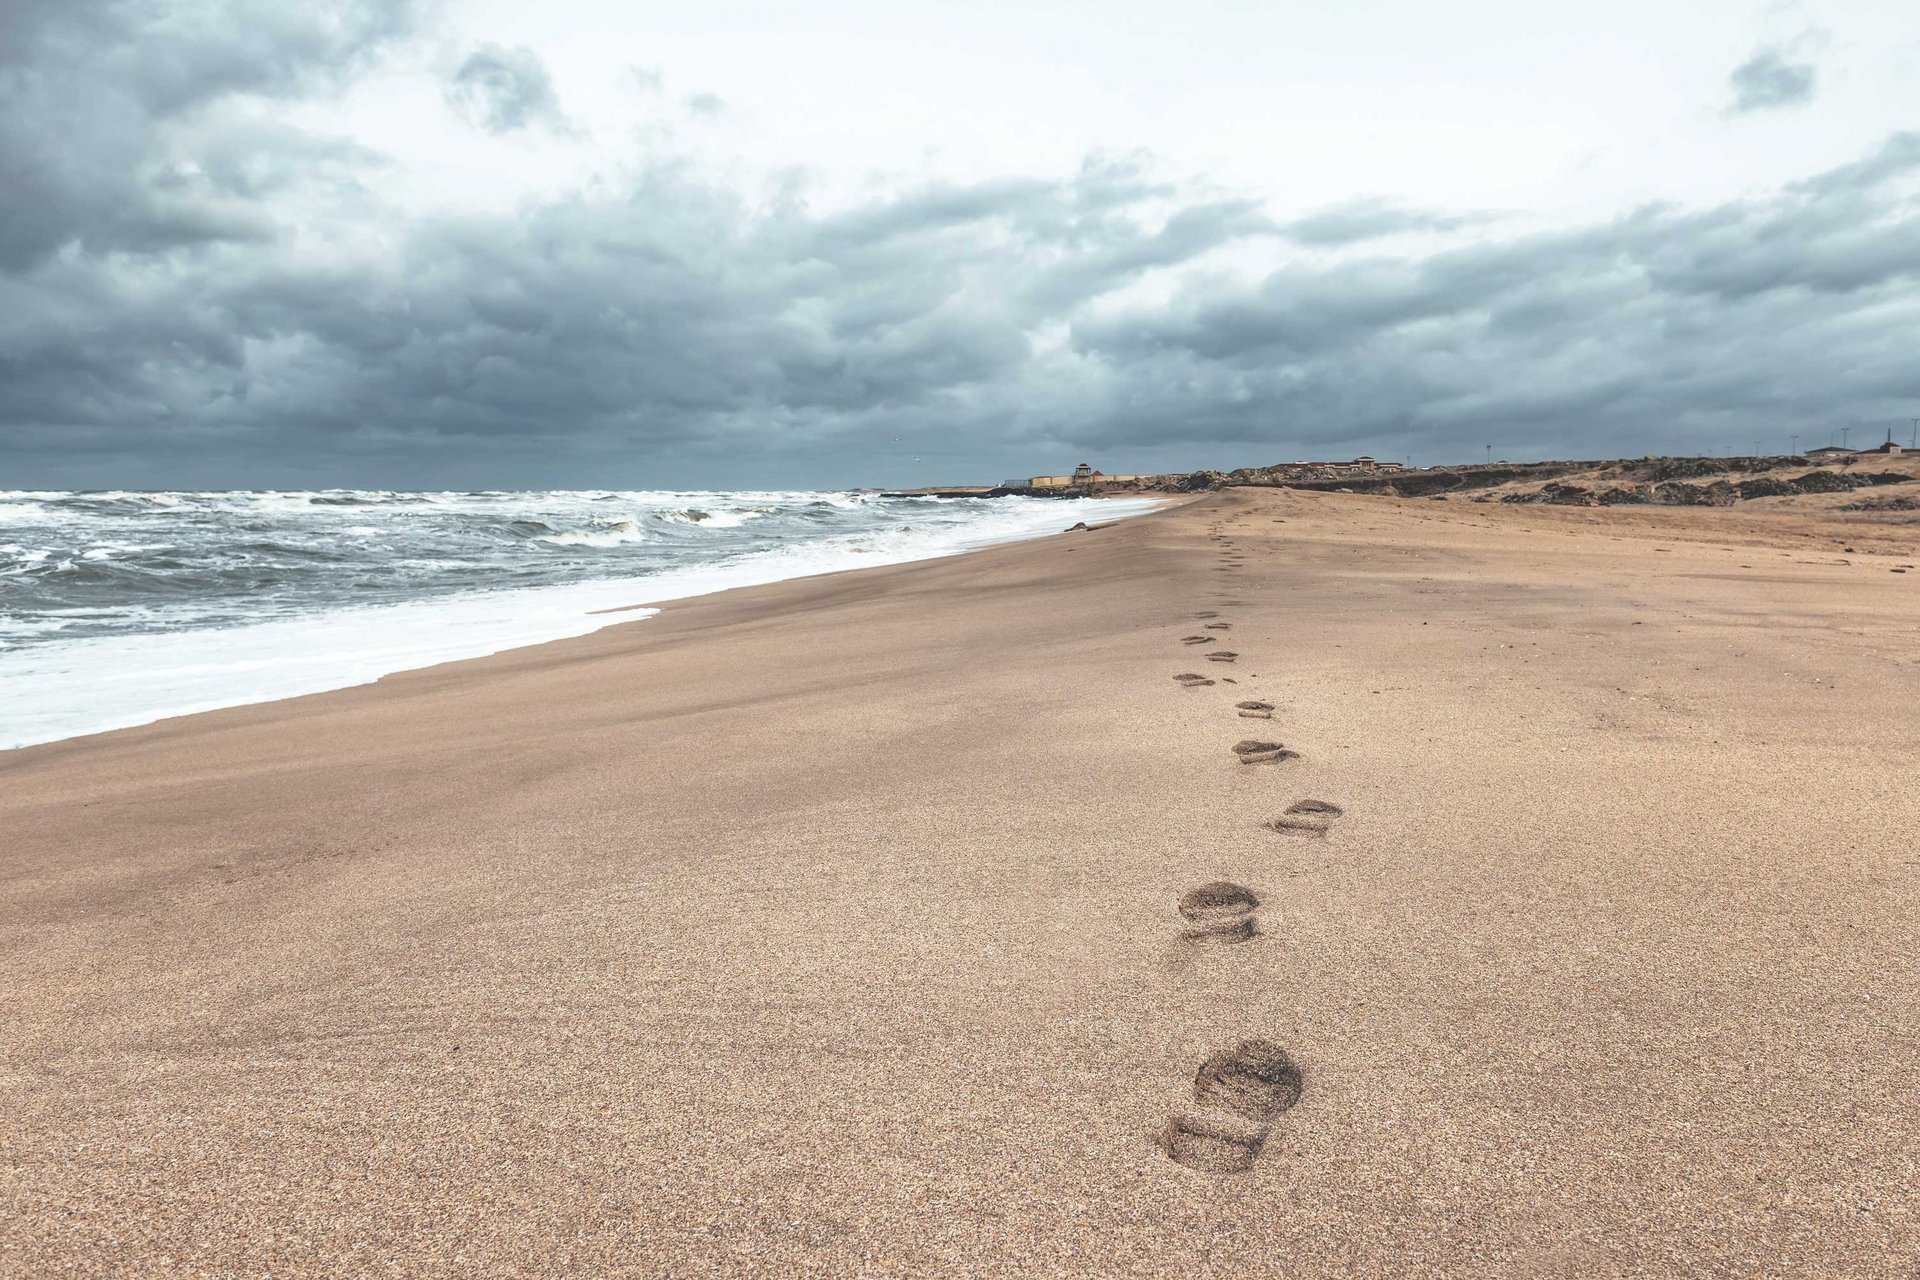 Fußspuren im Sand am Meer.